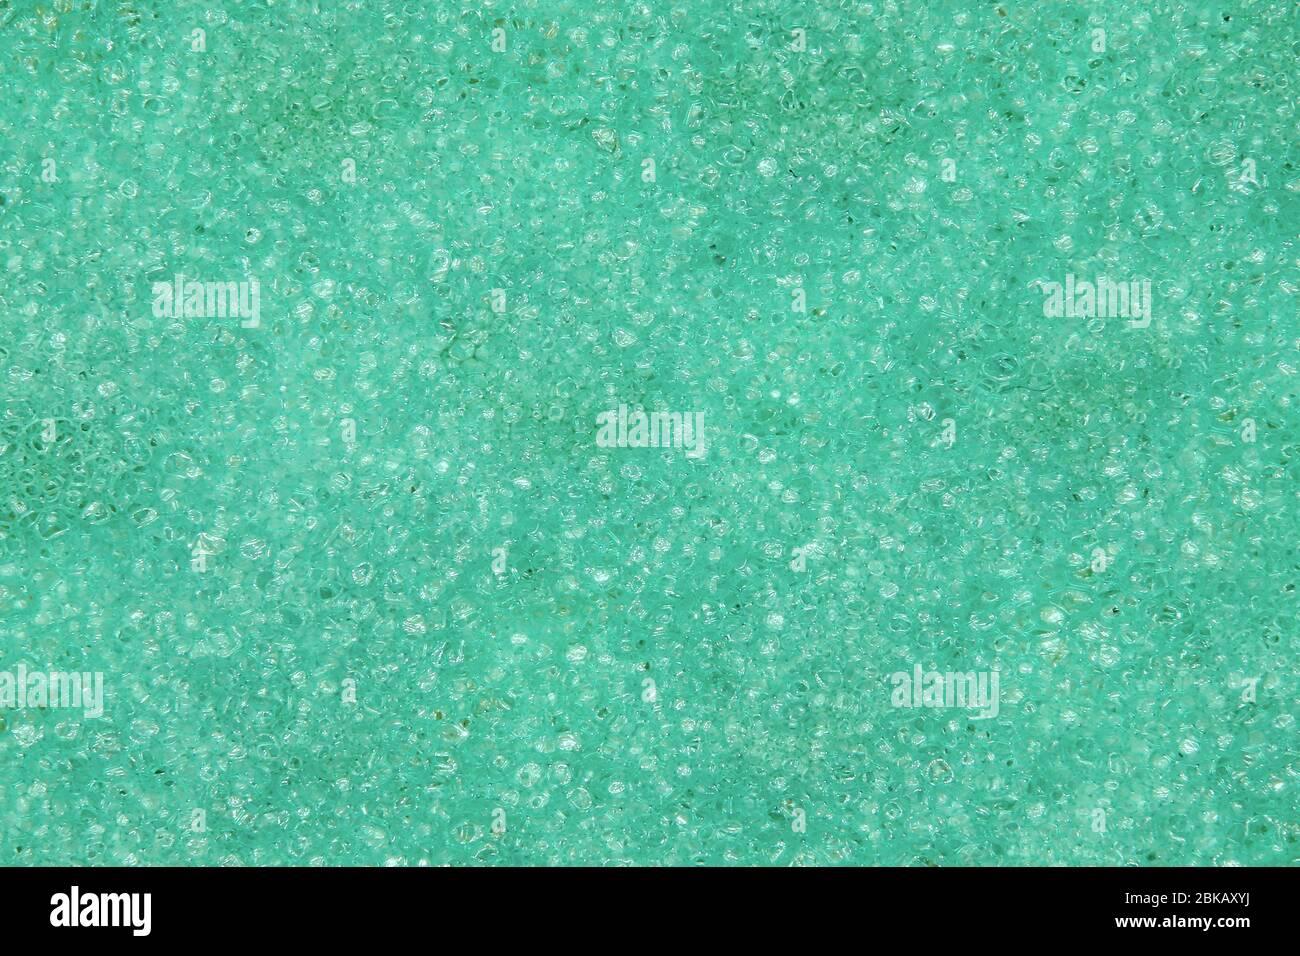 image background slice texture foam rubber turquoise Stock Photo